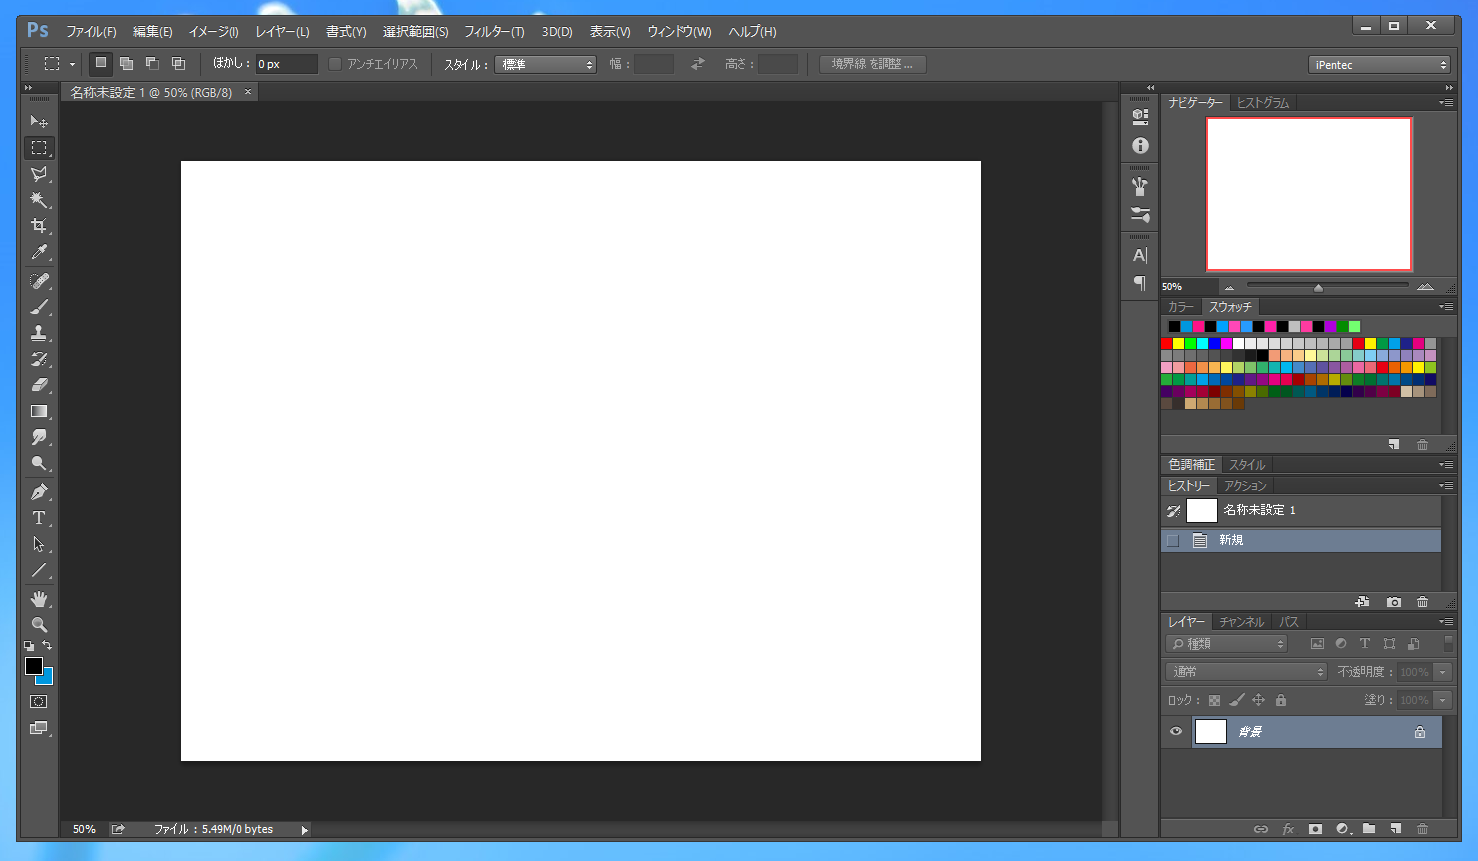 Photoshop Windows Vistaの壁紙のようなオーロラ効果を描画する Ipentec